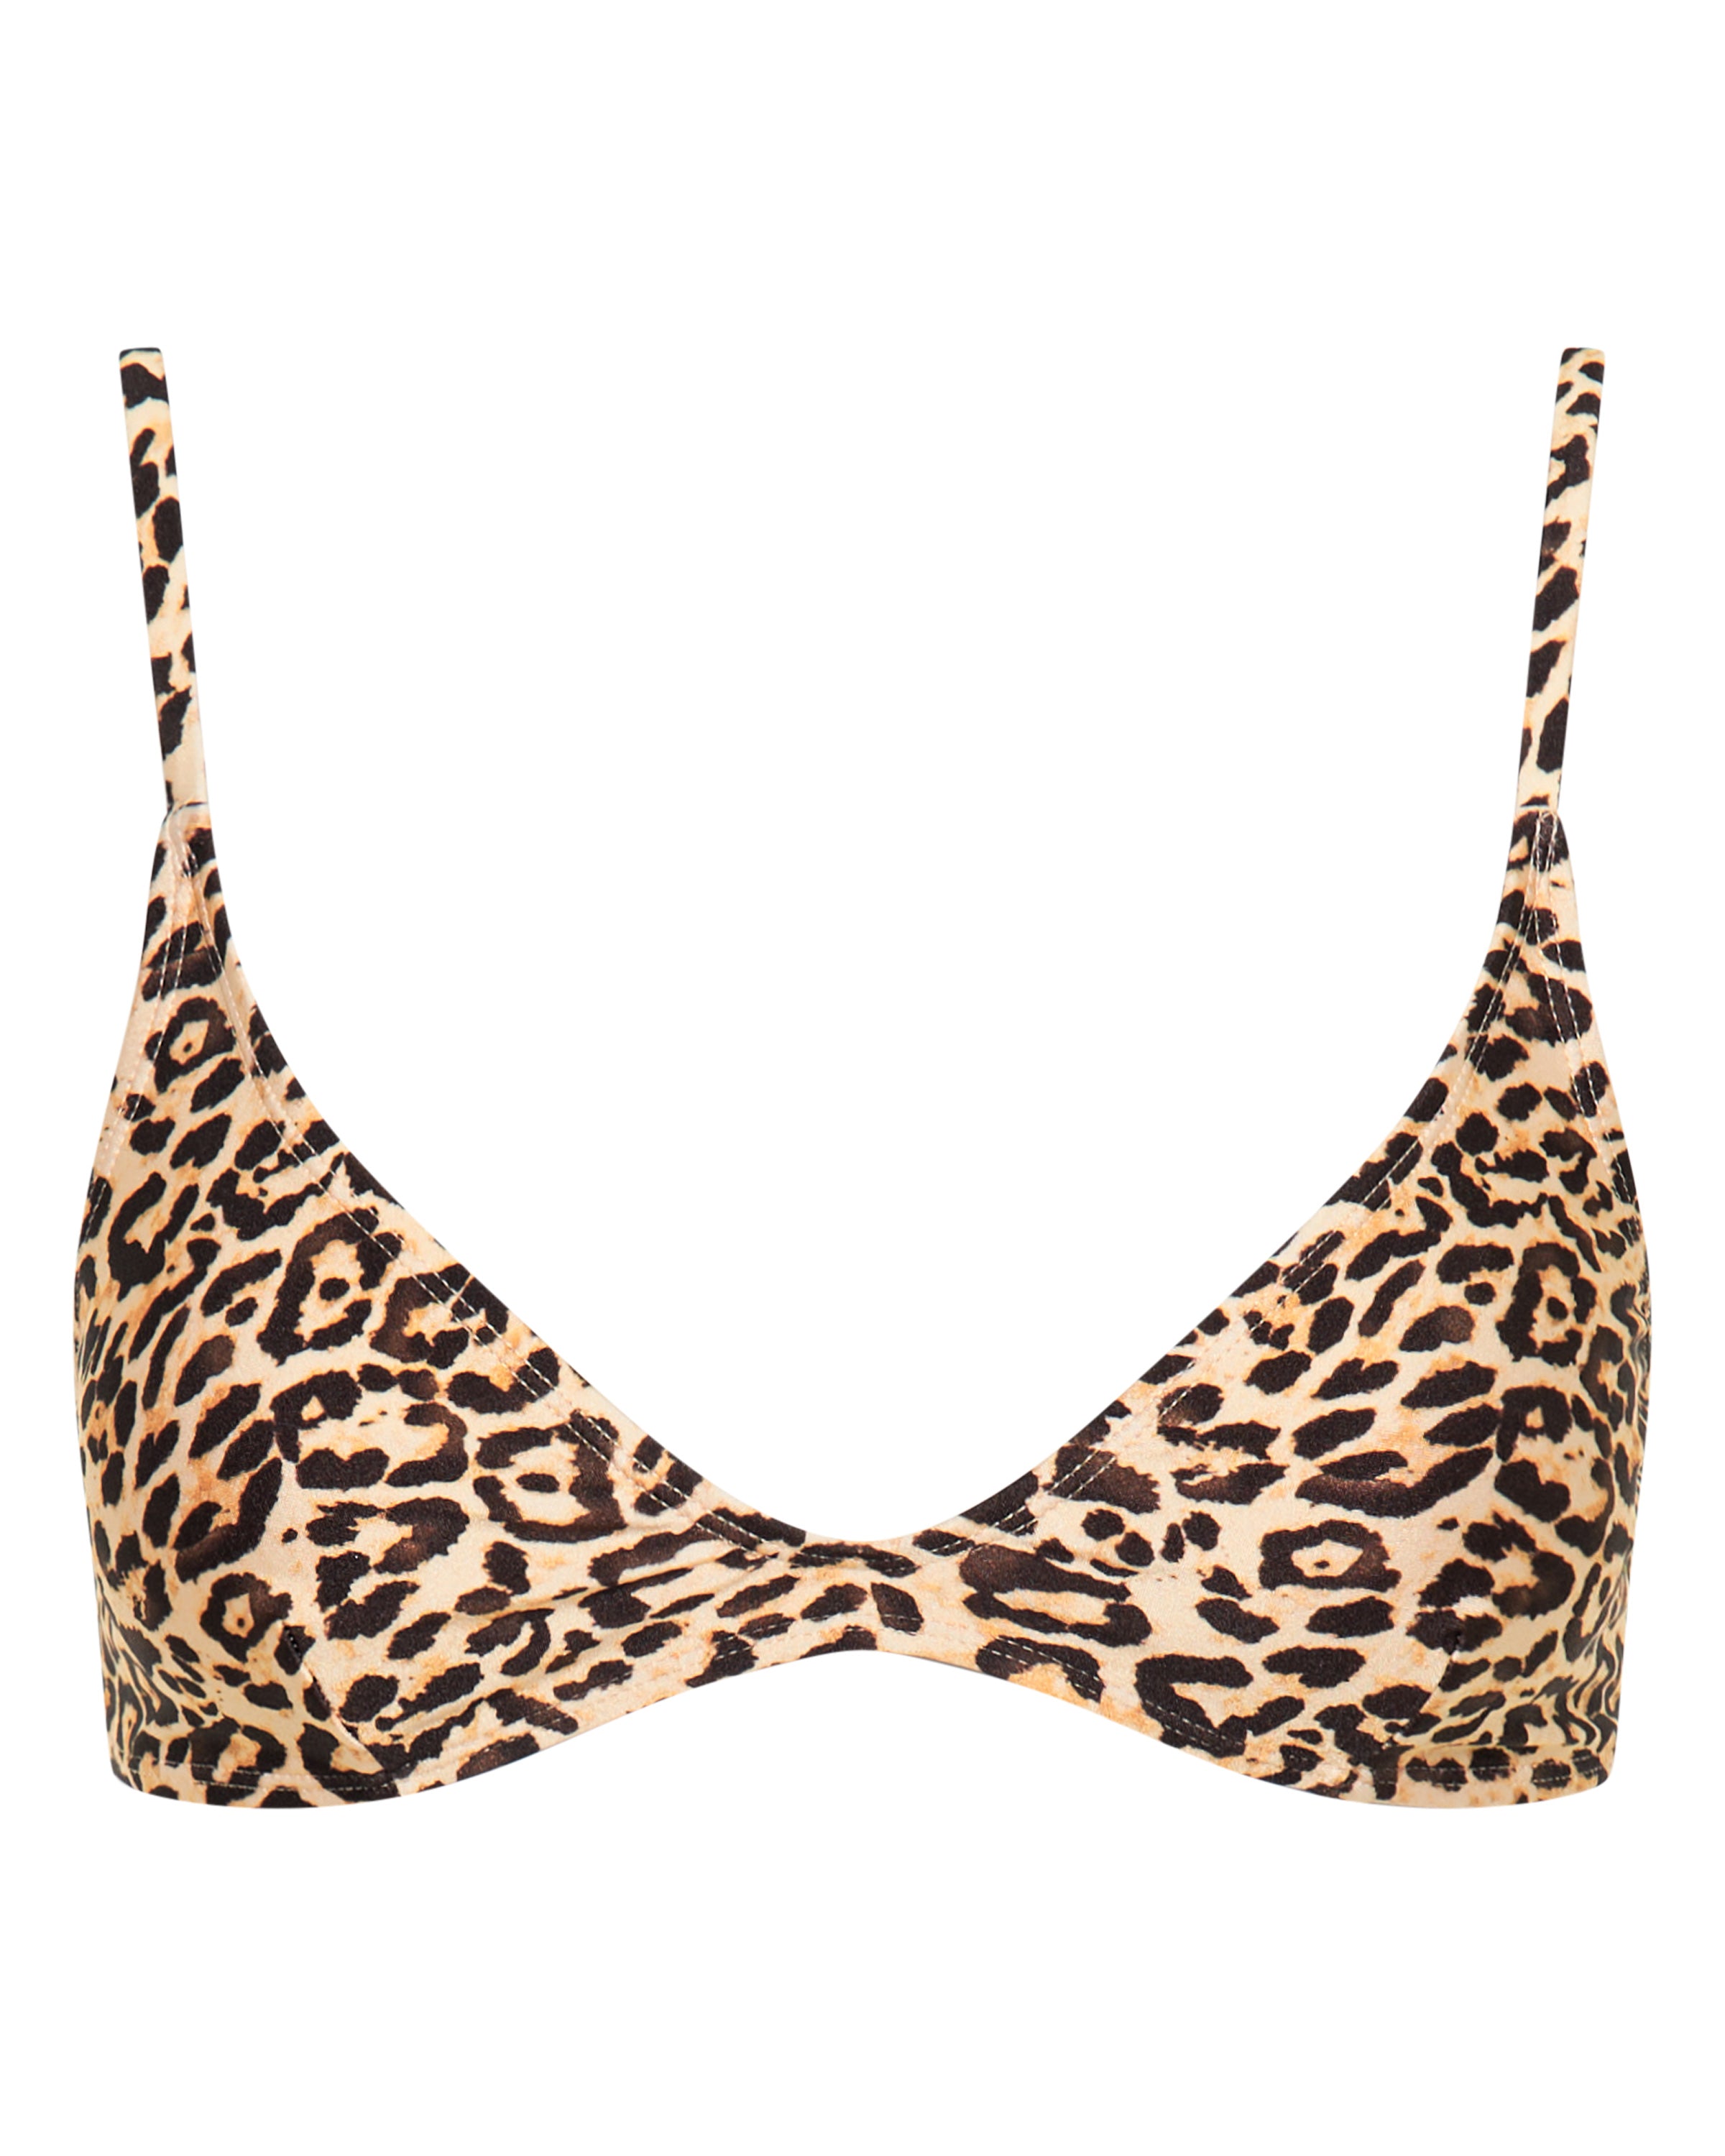 Lucy Scoop Bikini Top - Leopard | White Sands